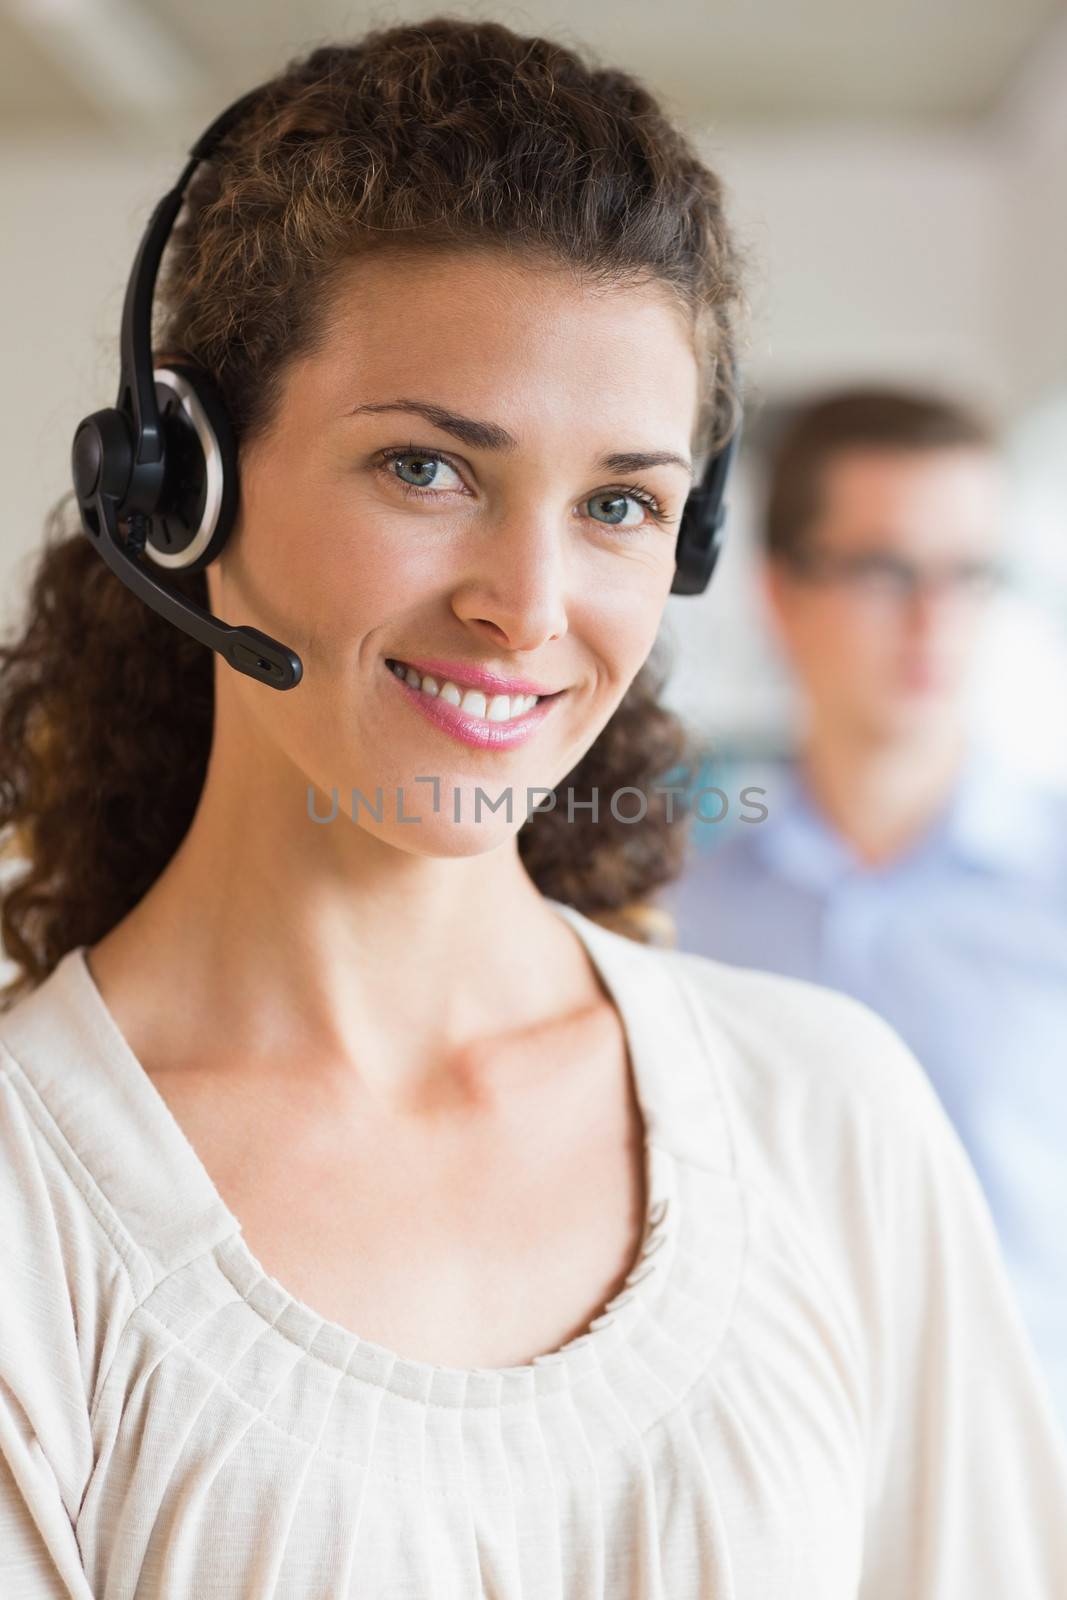 Closeup portrait of female customer service operator wearing headset in office